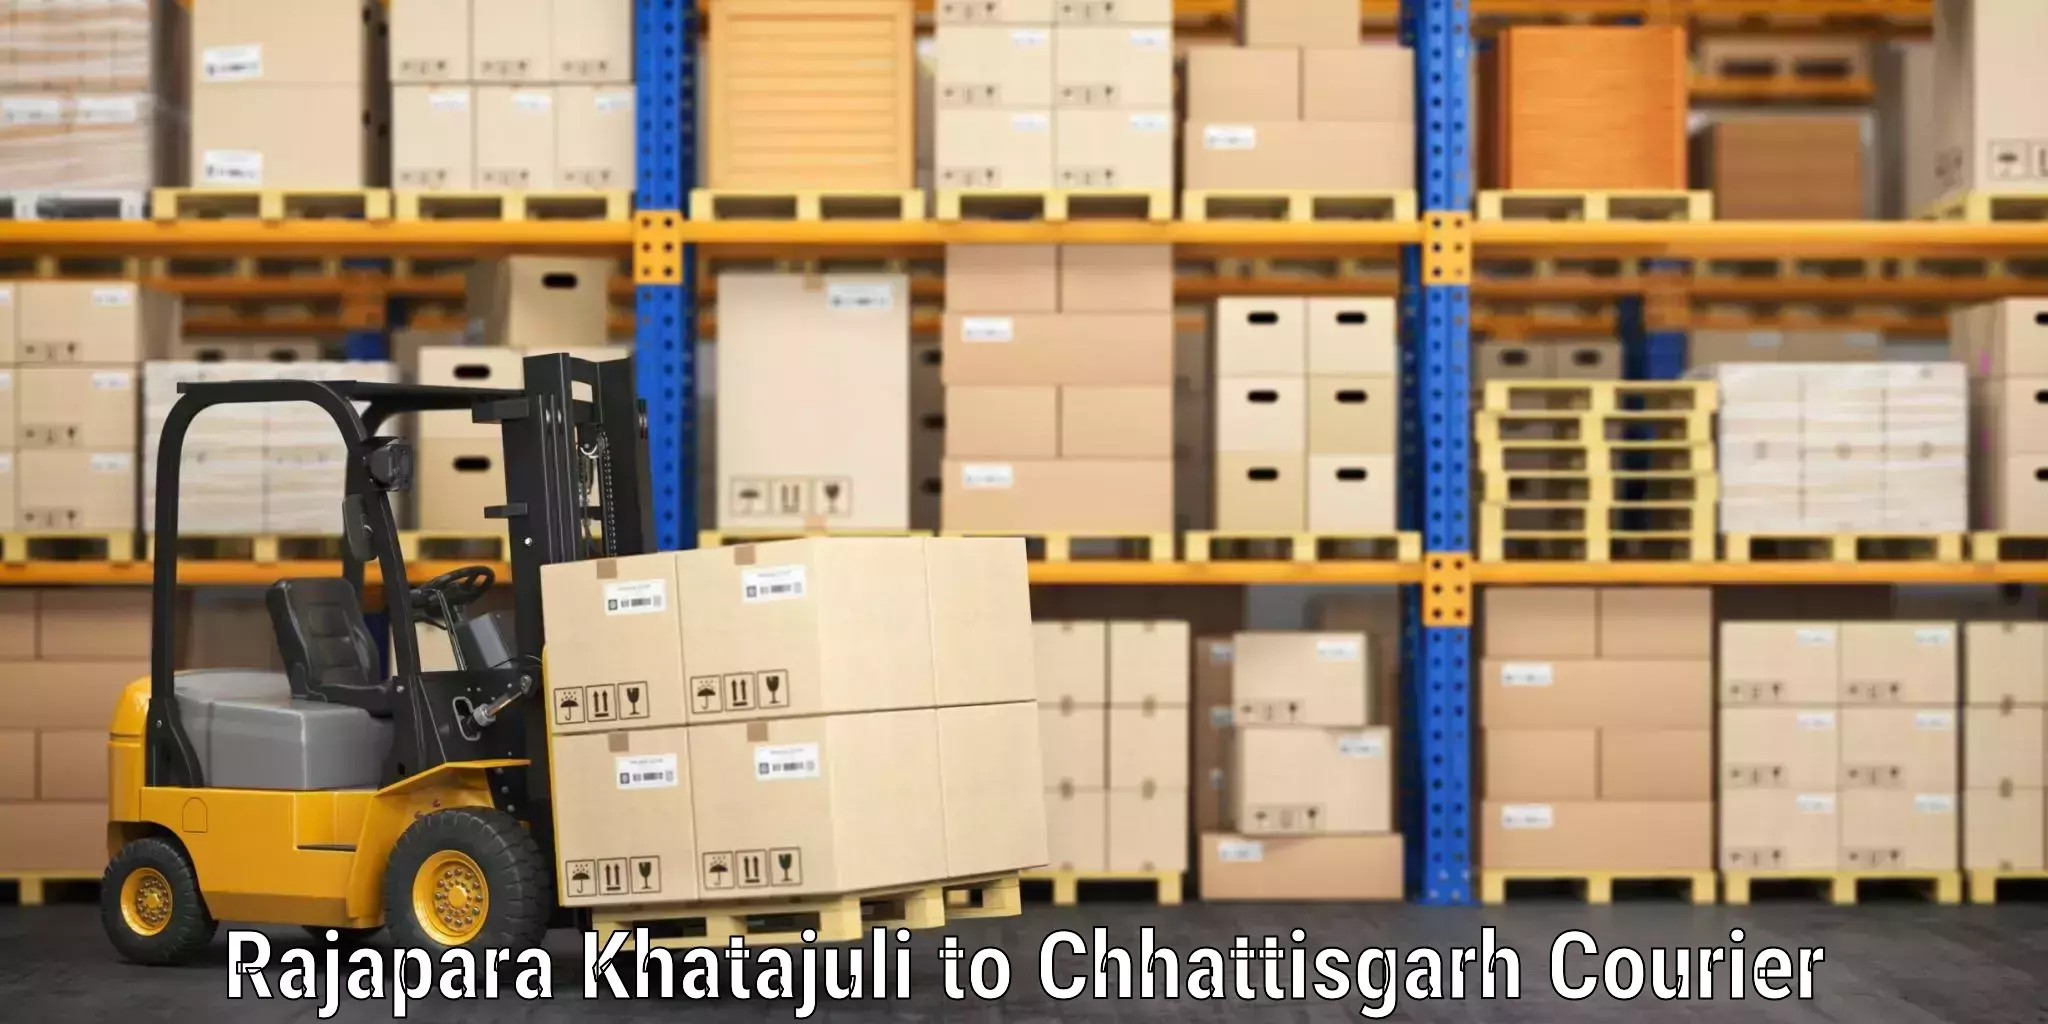 Baggage delivery support Rajapara Khatajuli to Patna Chhattisgarh